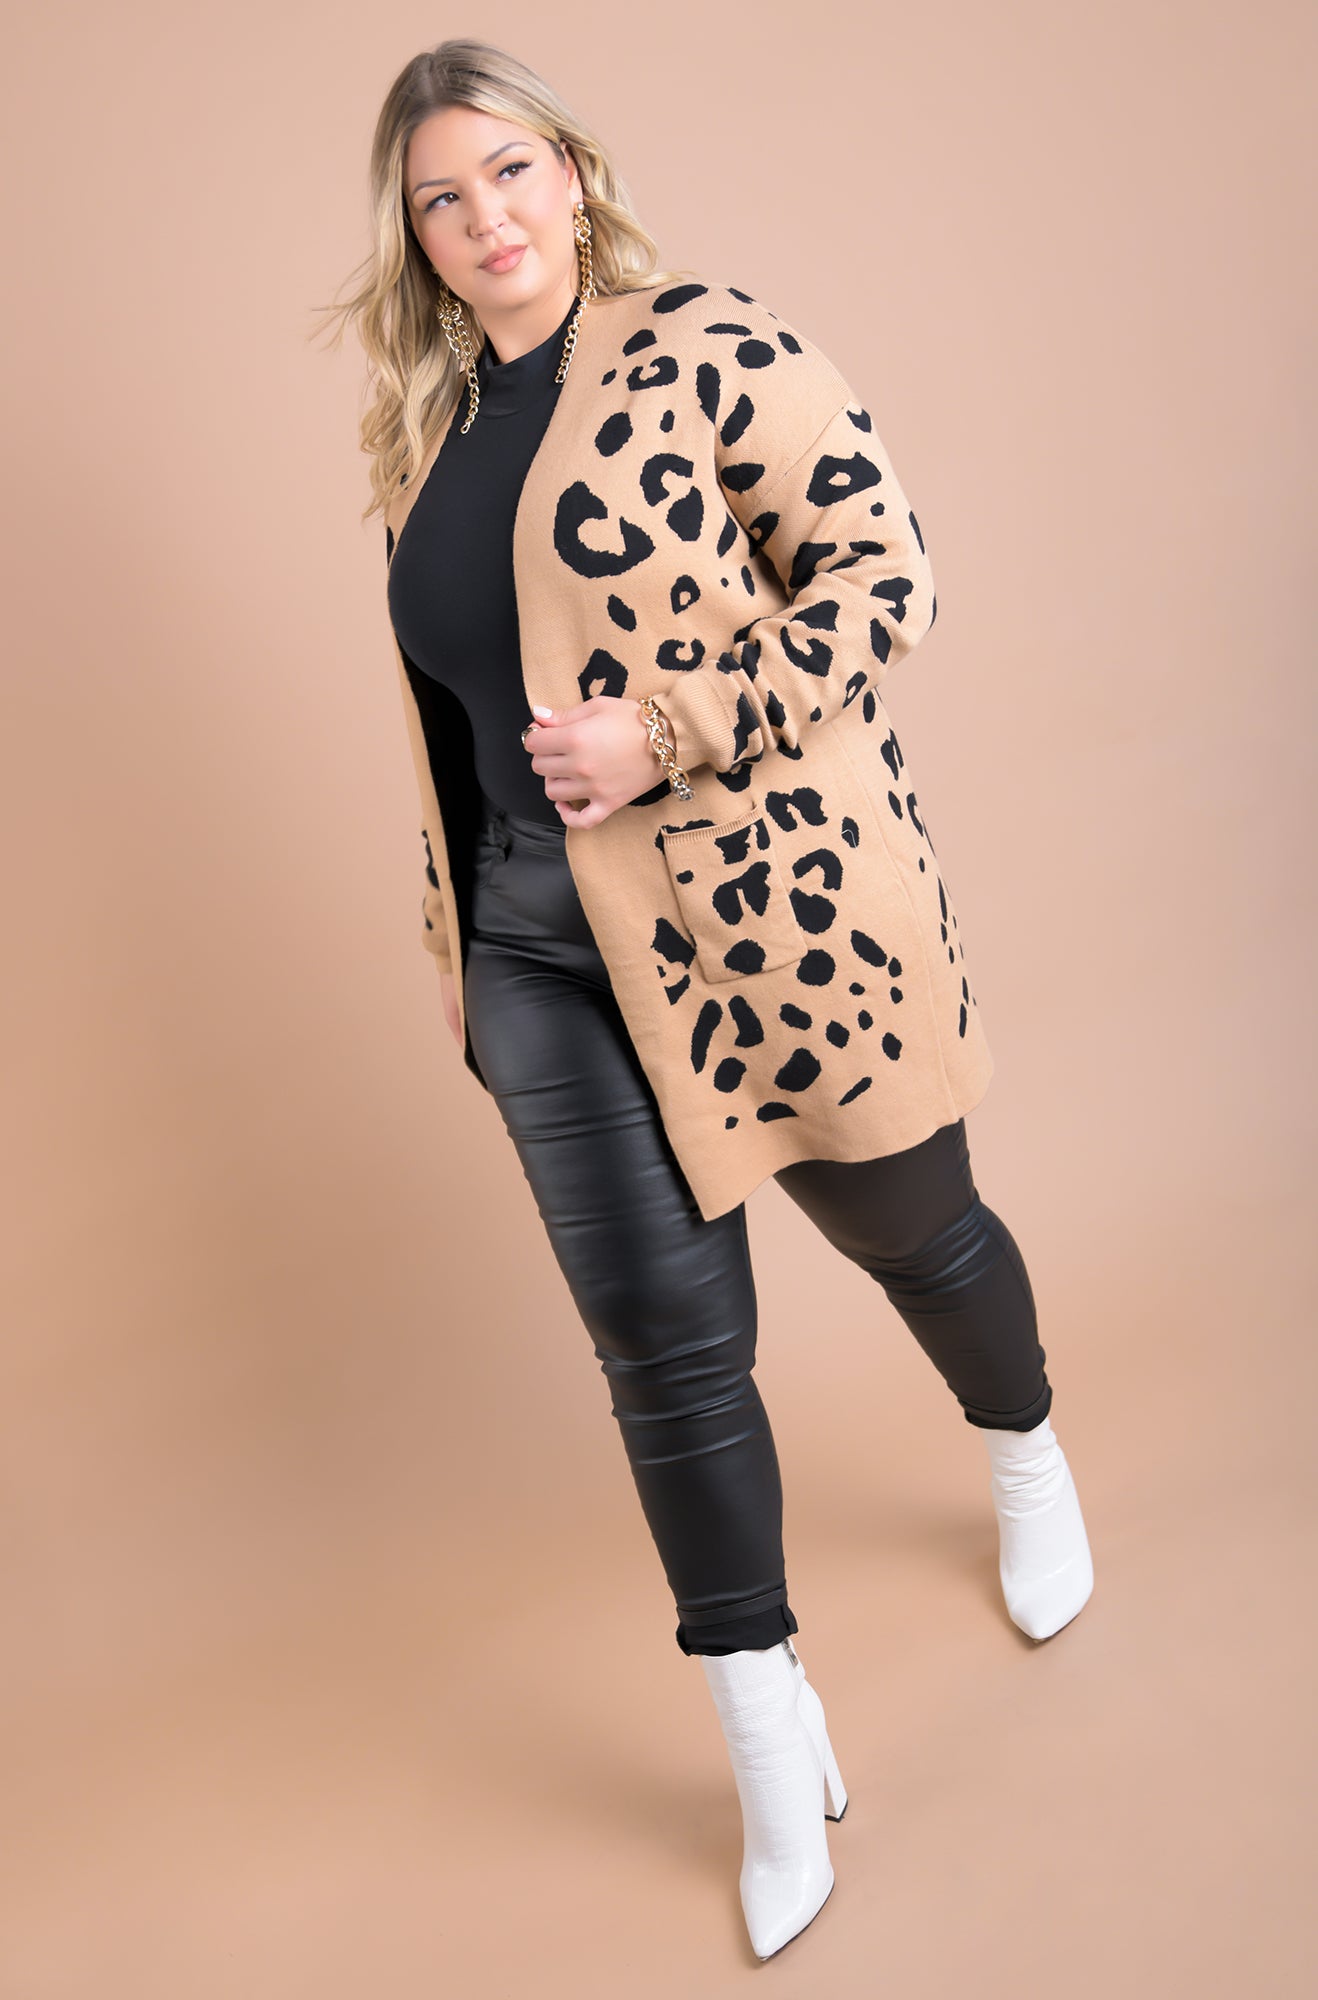 Cheetah Print Sweater Plus Sizes